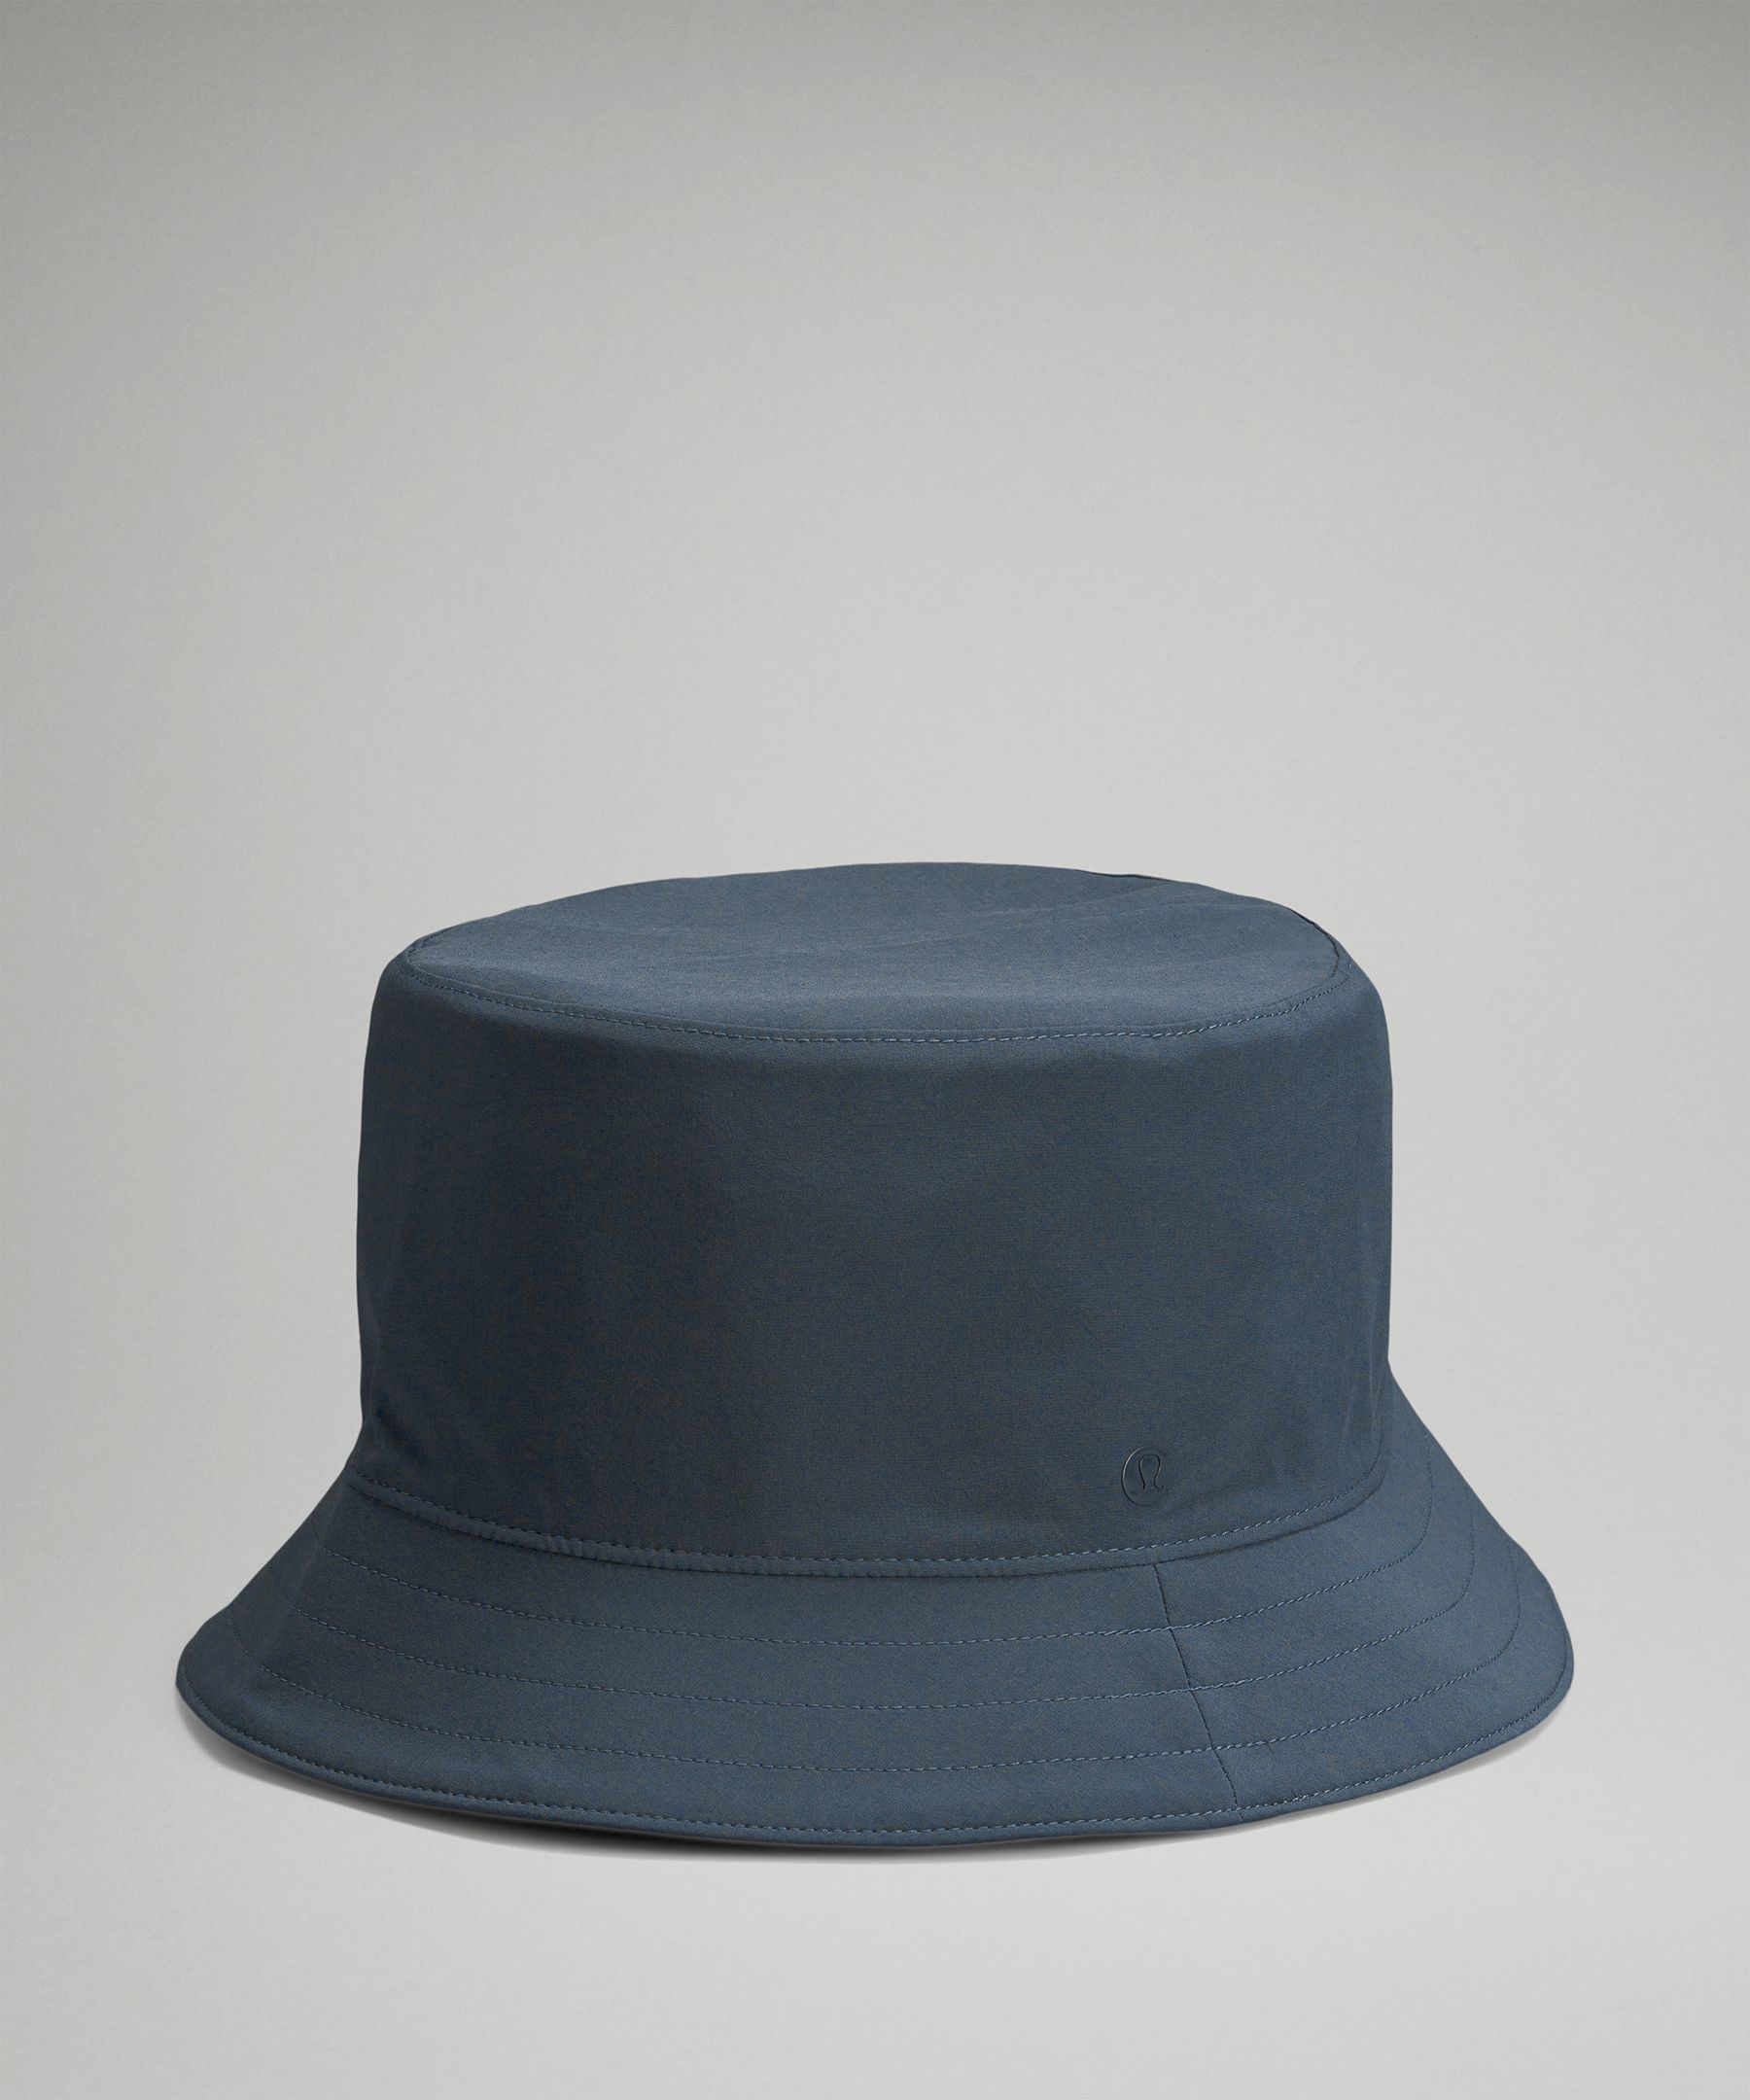 Lululemon Both Ways Reversible Bucket Hat In Iron Blue/gravel Dust Iron Blue